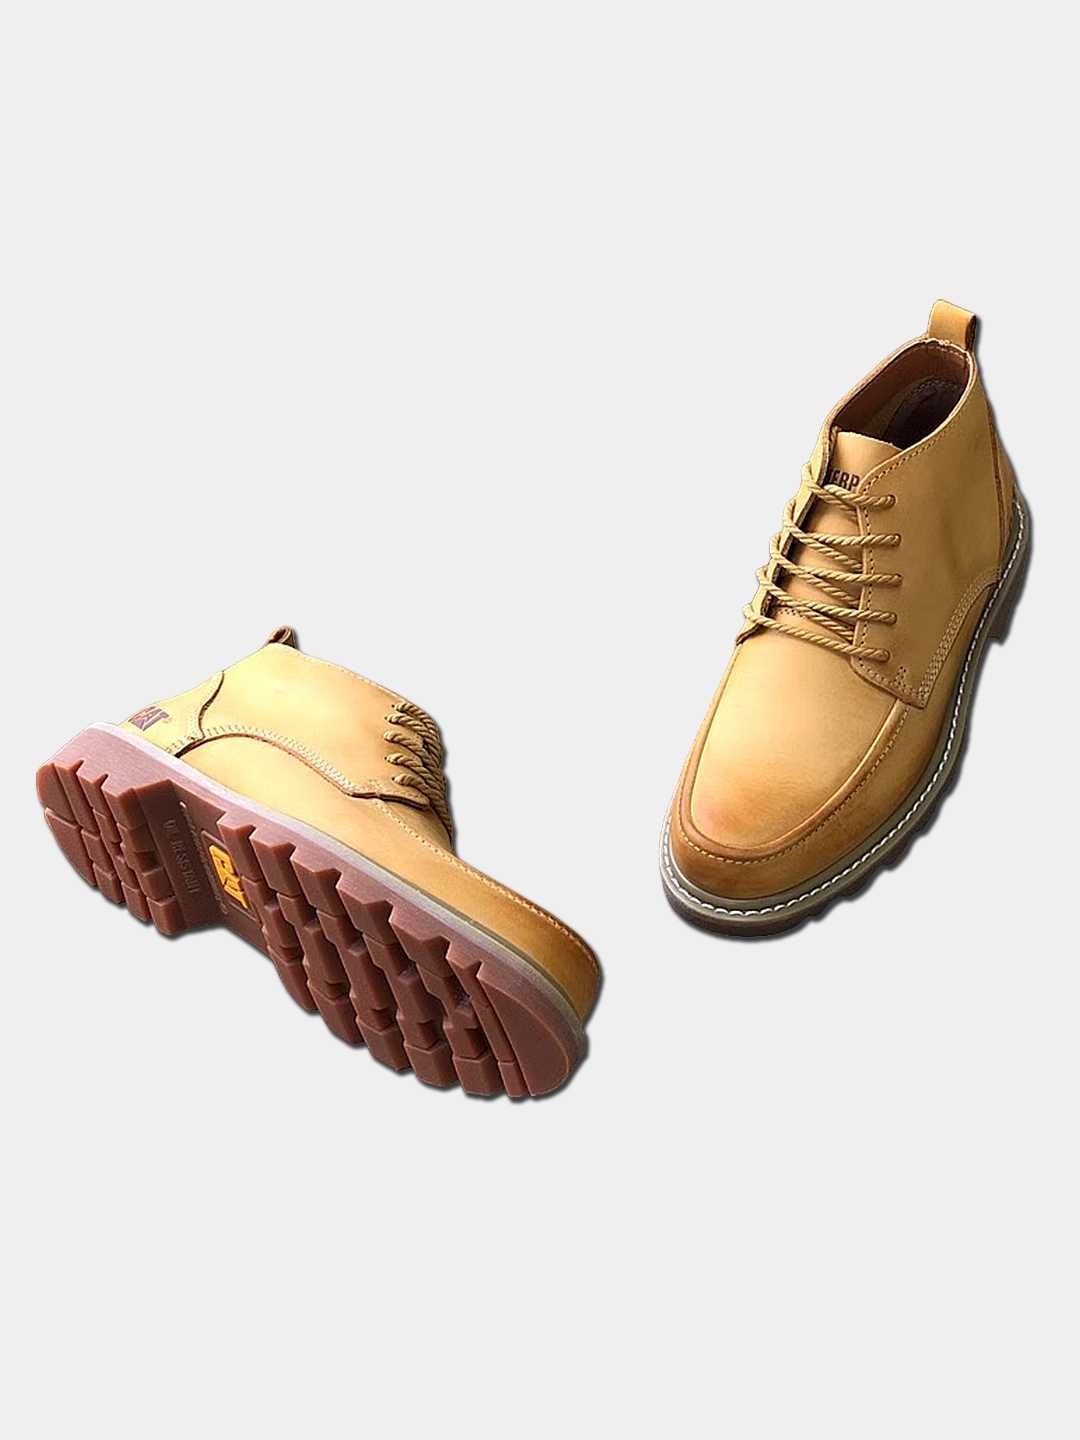 Мужские кожаные туфли-ботинки Caterpillar Chukka [41-44]